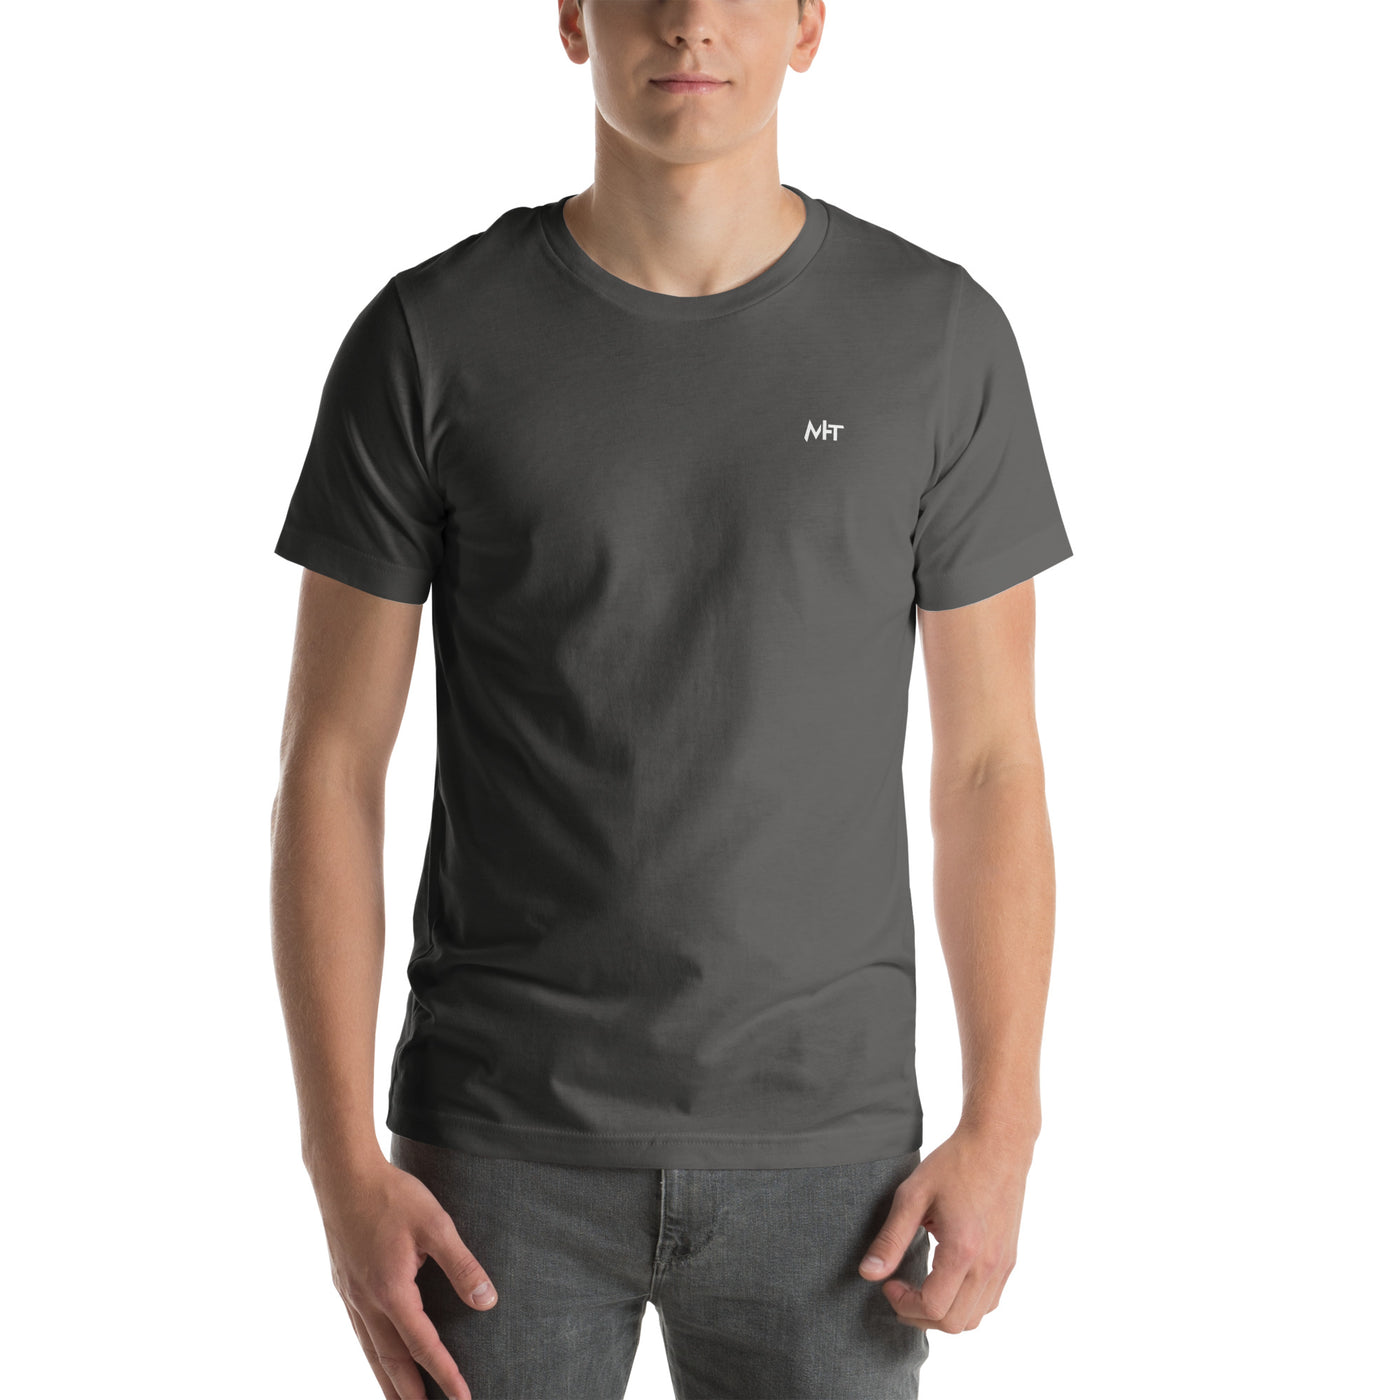 BULLI$H - Unisex t-shirt ( Back Print )